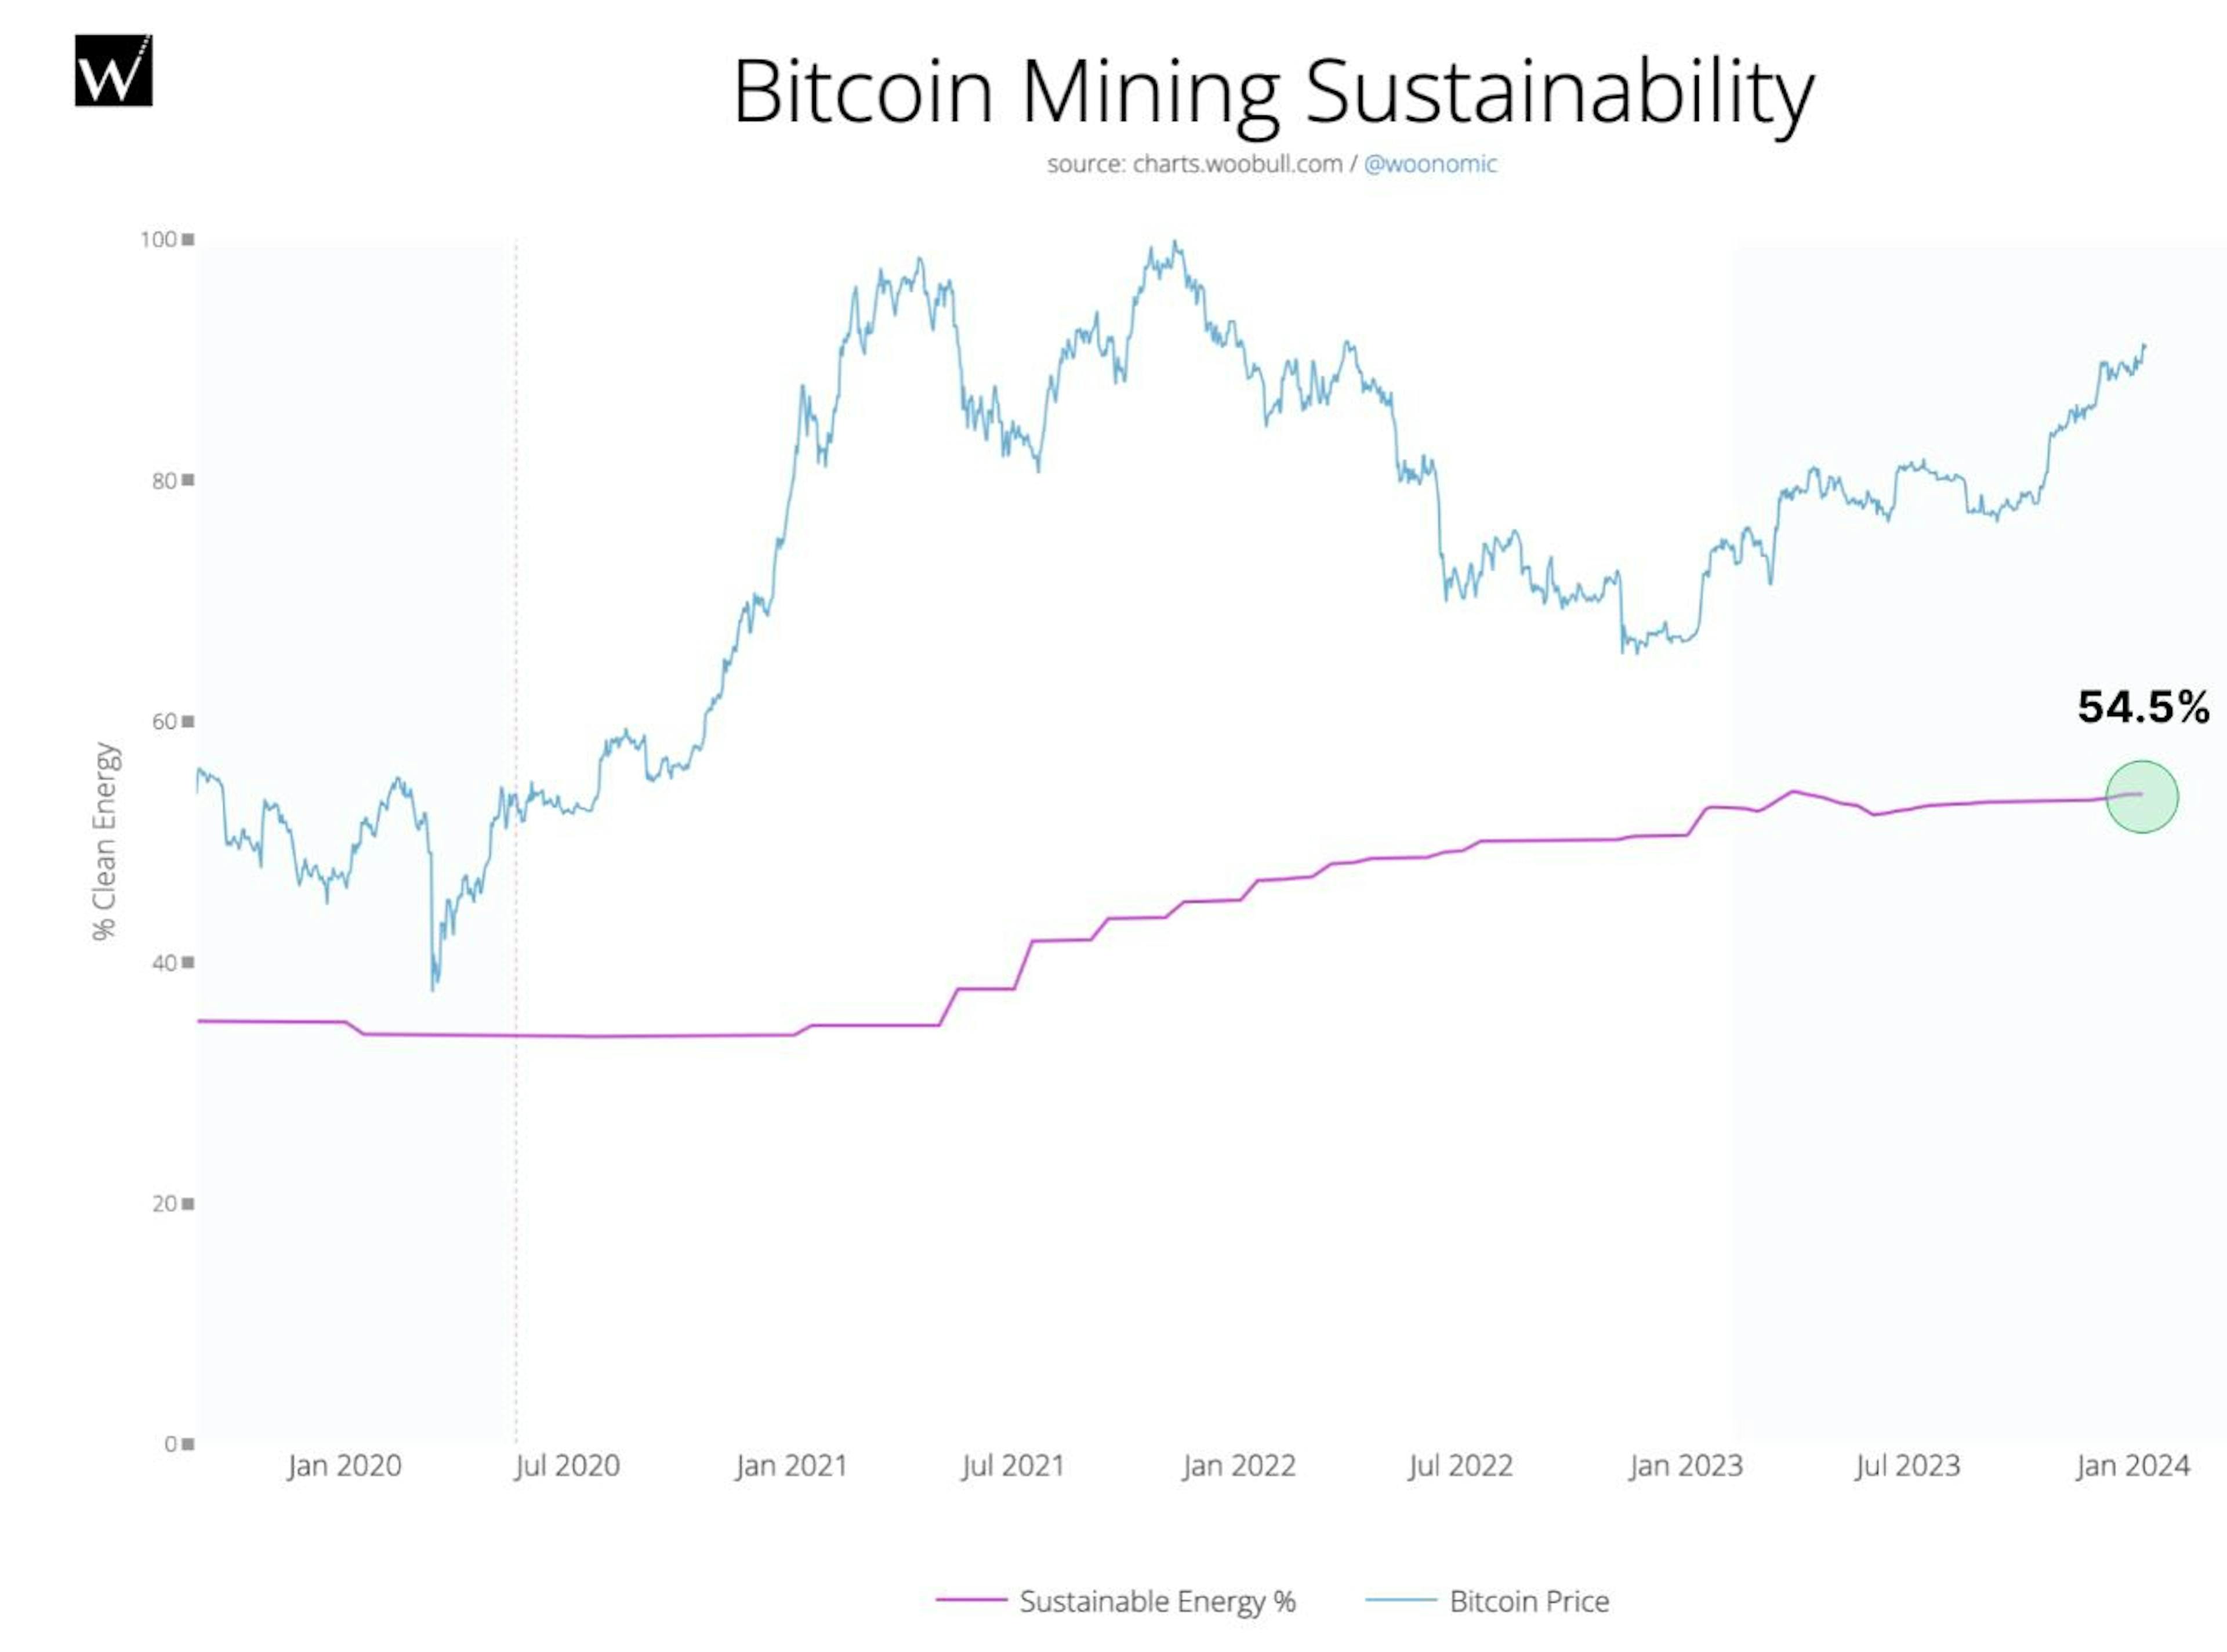 Bitcoin mining hit 54.5%. Source: Woobull